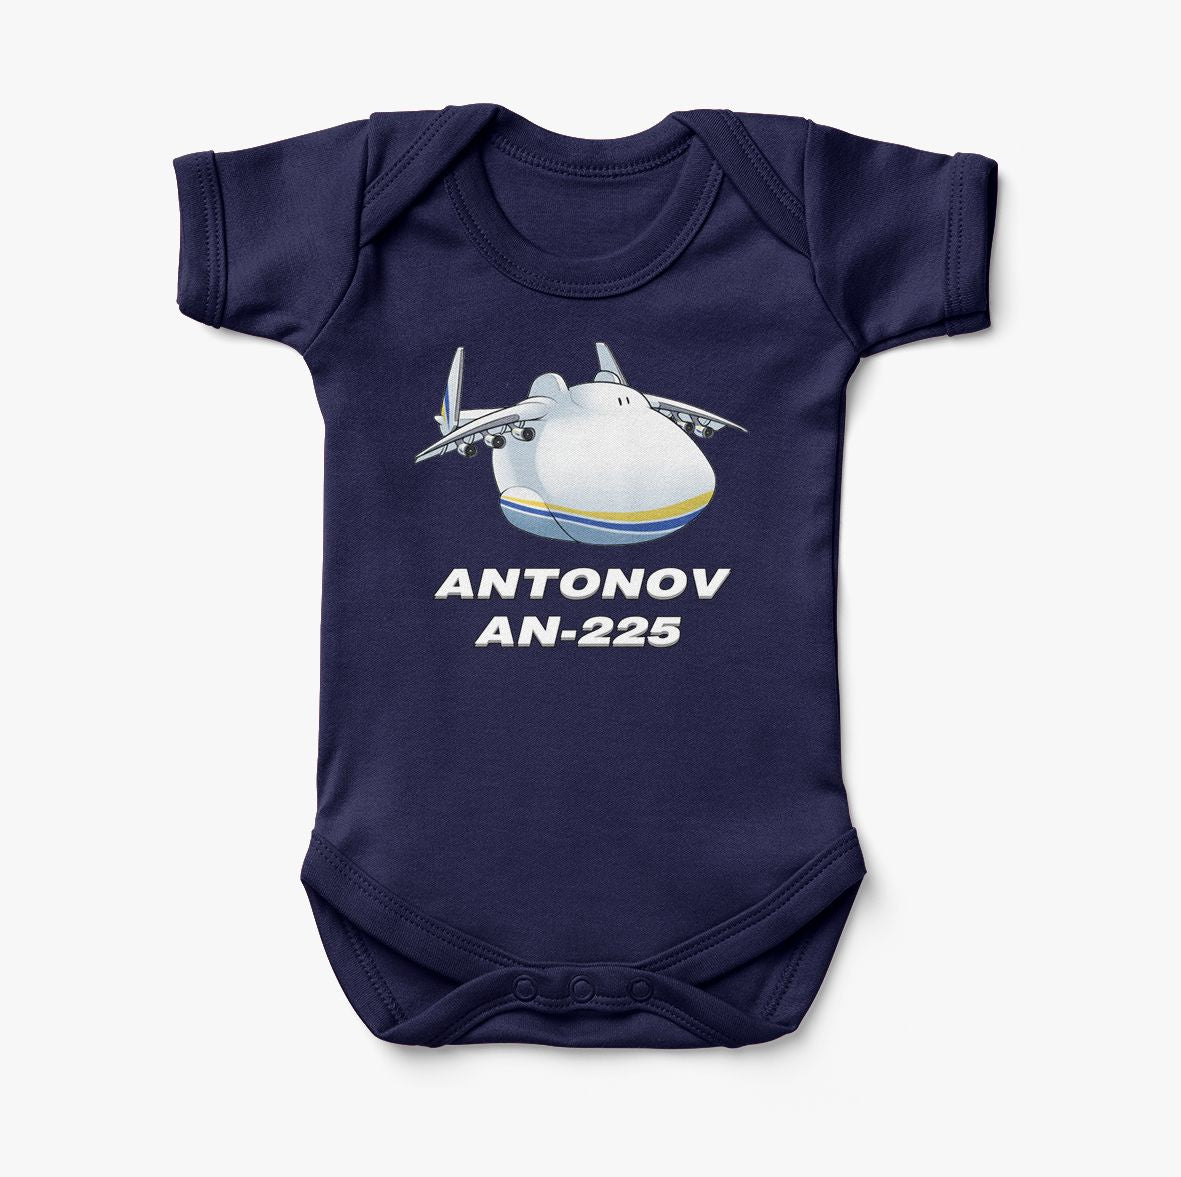 Antonov AN-225 (21) Designed Baby Bodysuits